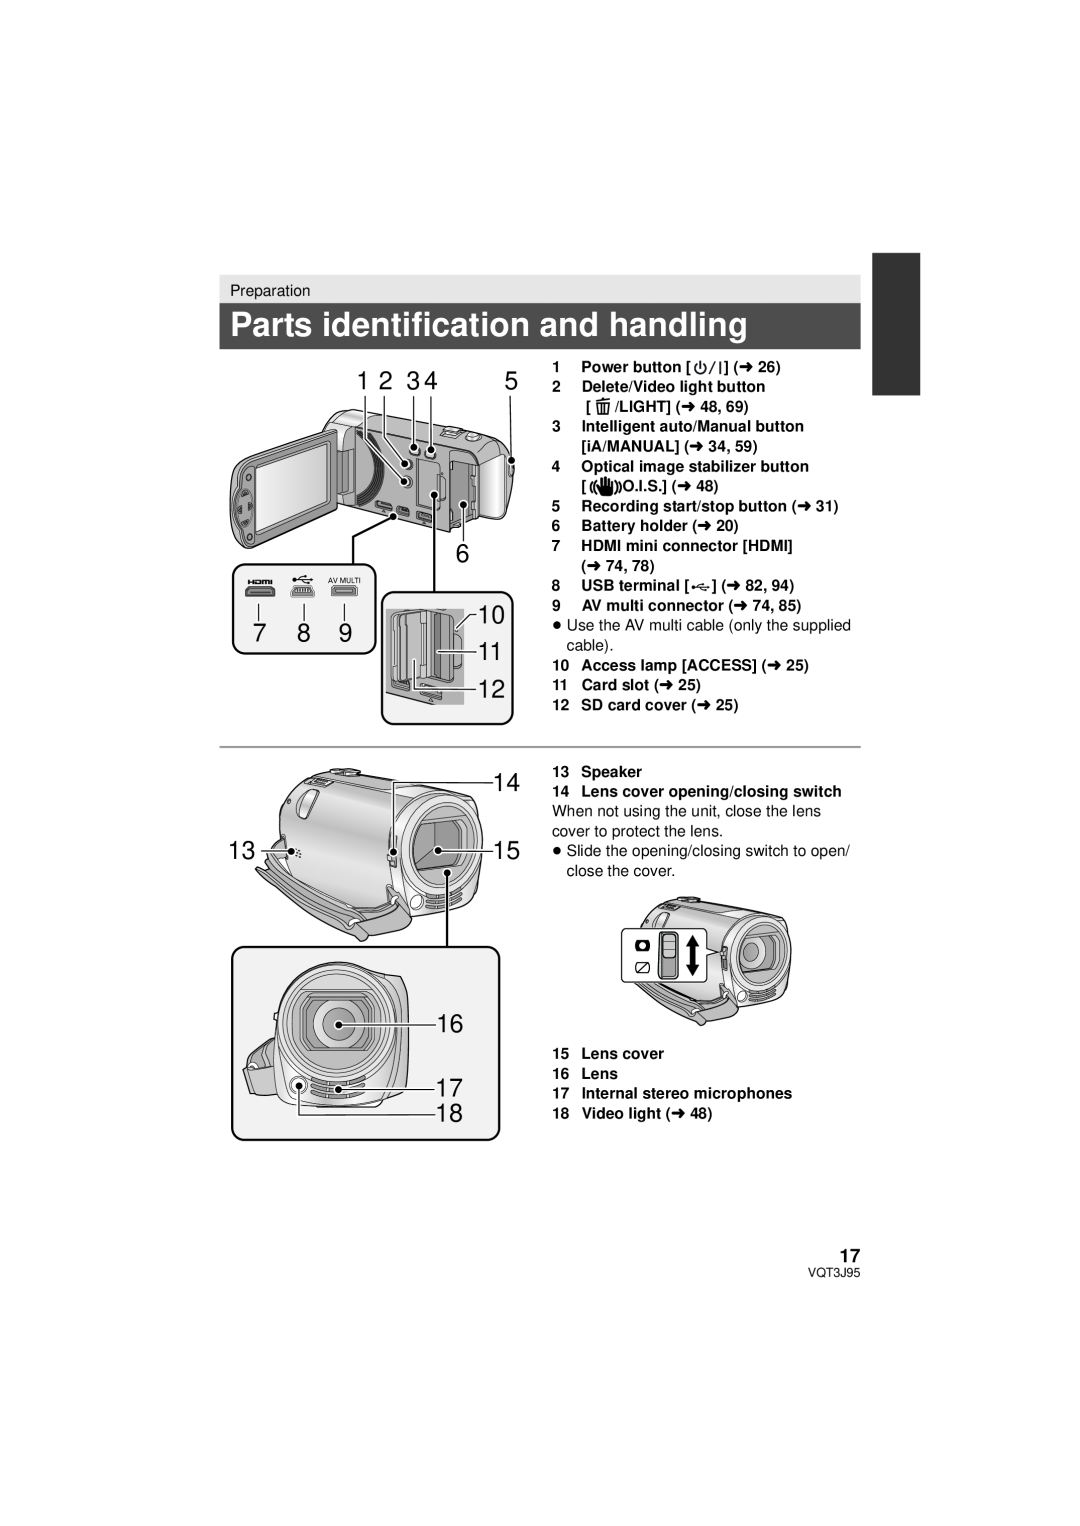 Panasonic HDC-TM40P/PC Parts identification and handling, 1 2 3, Power button, Delete/Video light button, LIGHT l48, l 74 